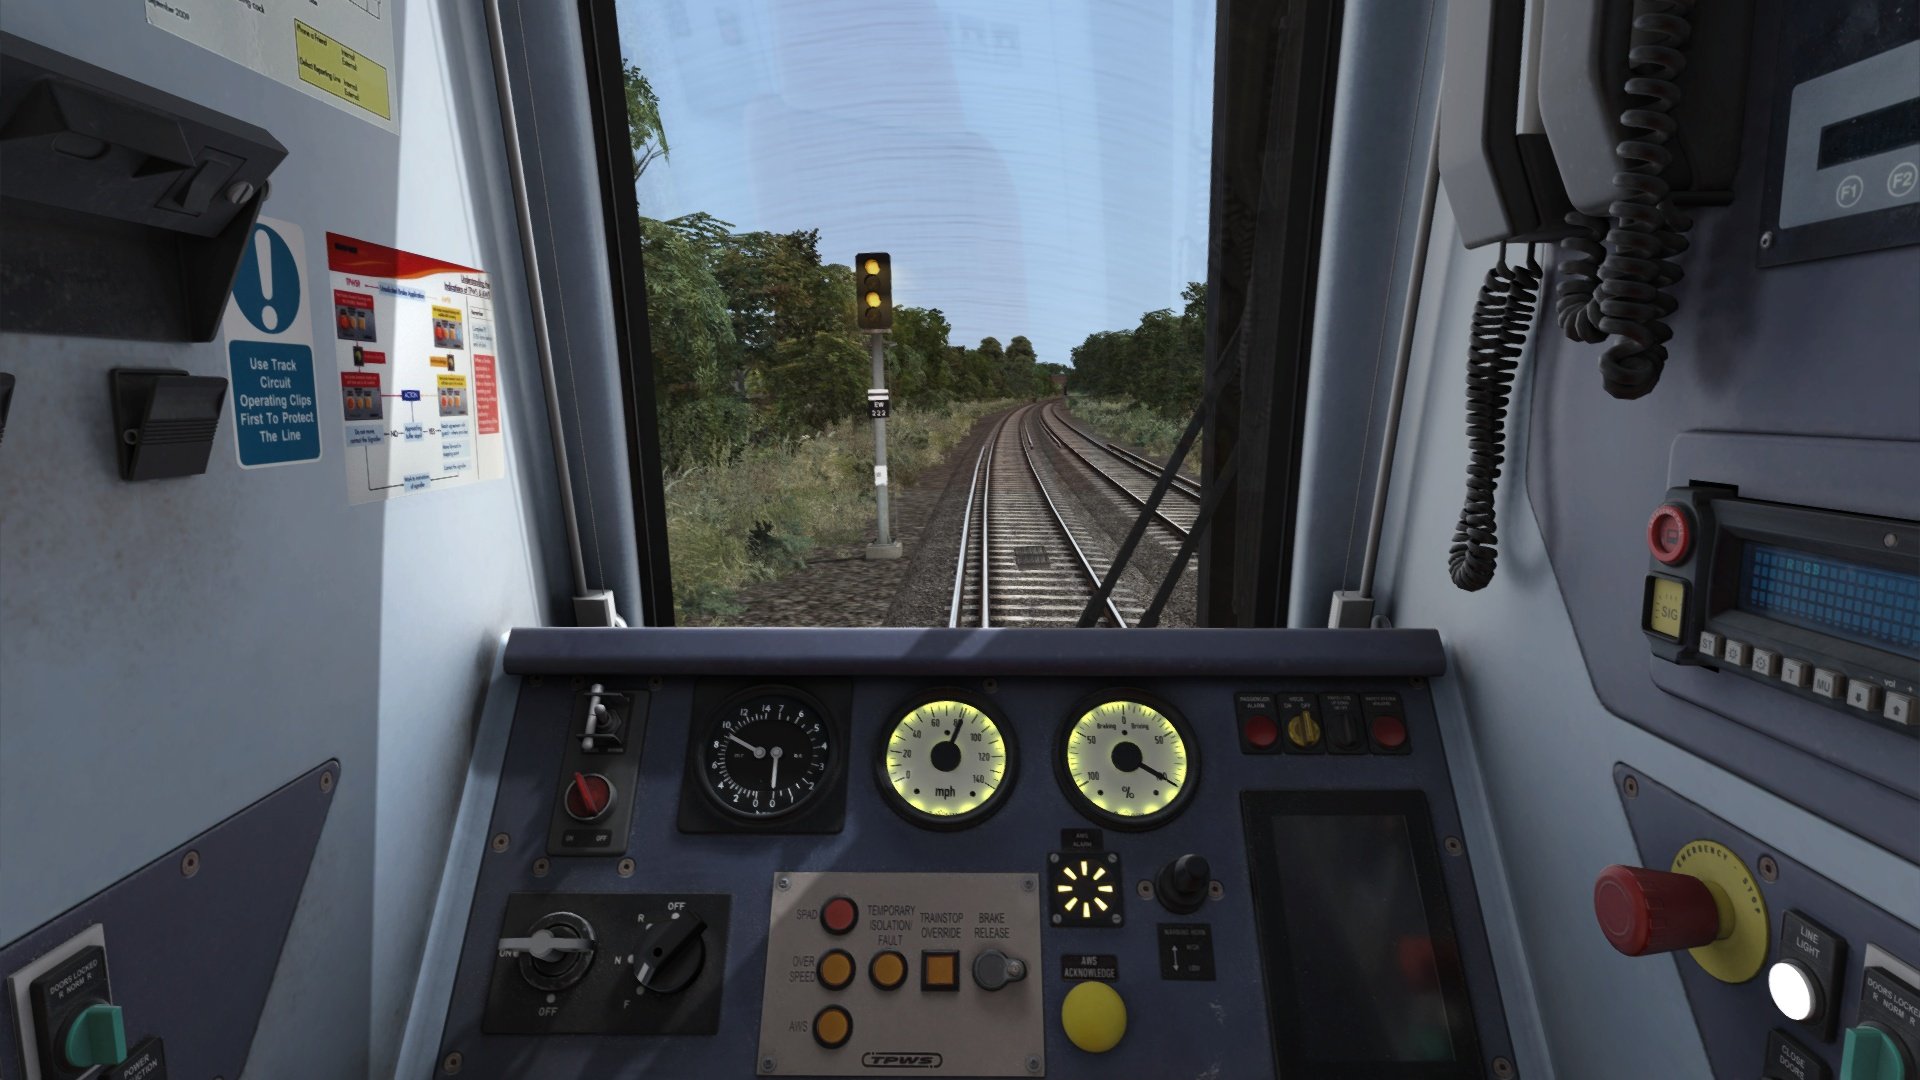 train simulator 2019 pc